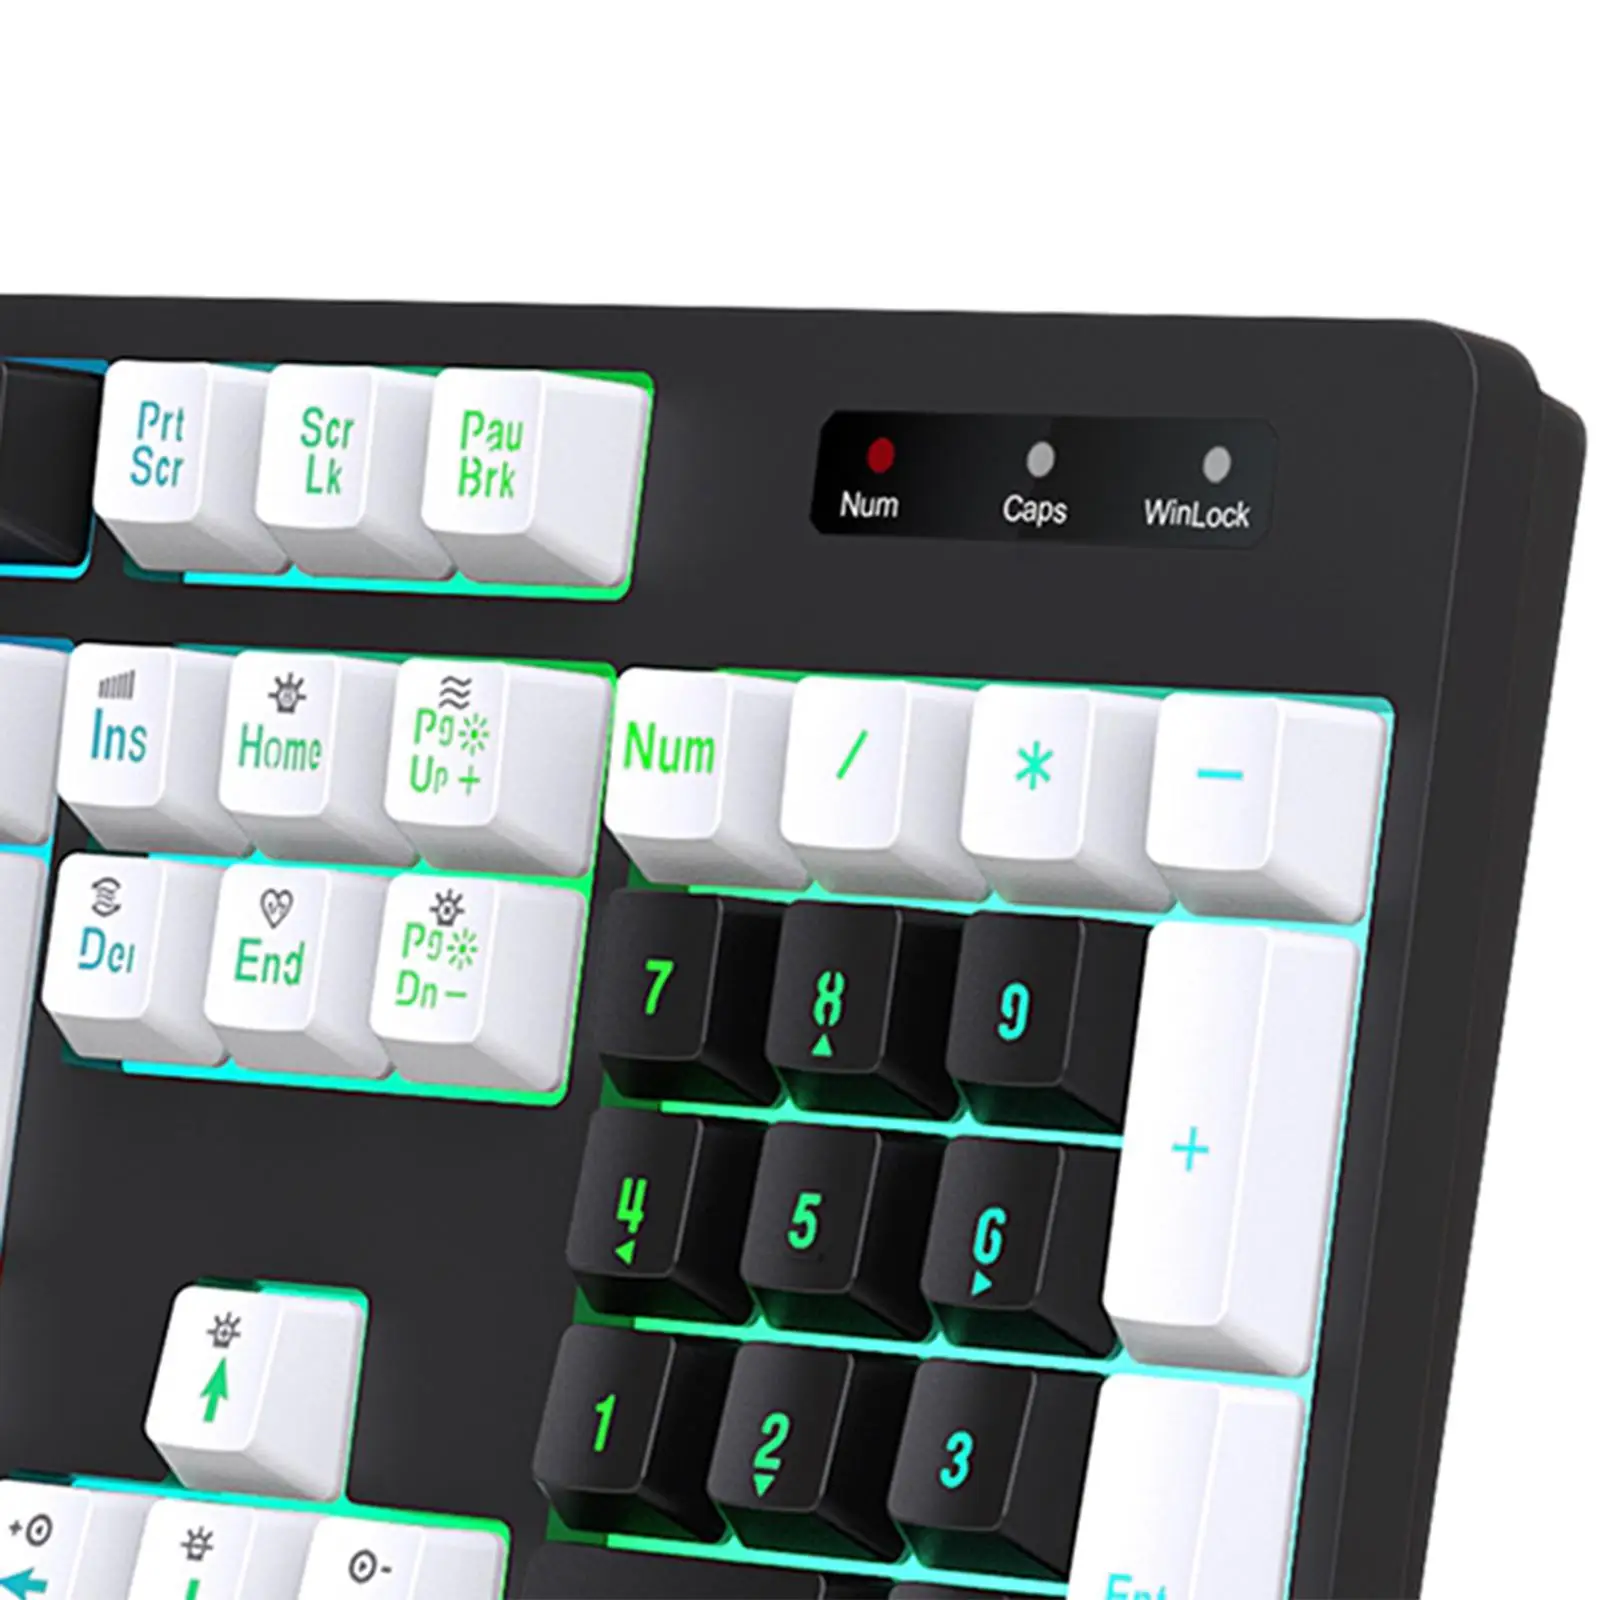 104 Keys Keyboard Mouse Comb Set Three Speed DPI Adjustable Gaming Keyboard for Computer